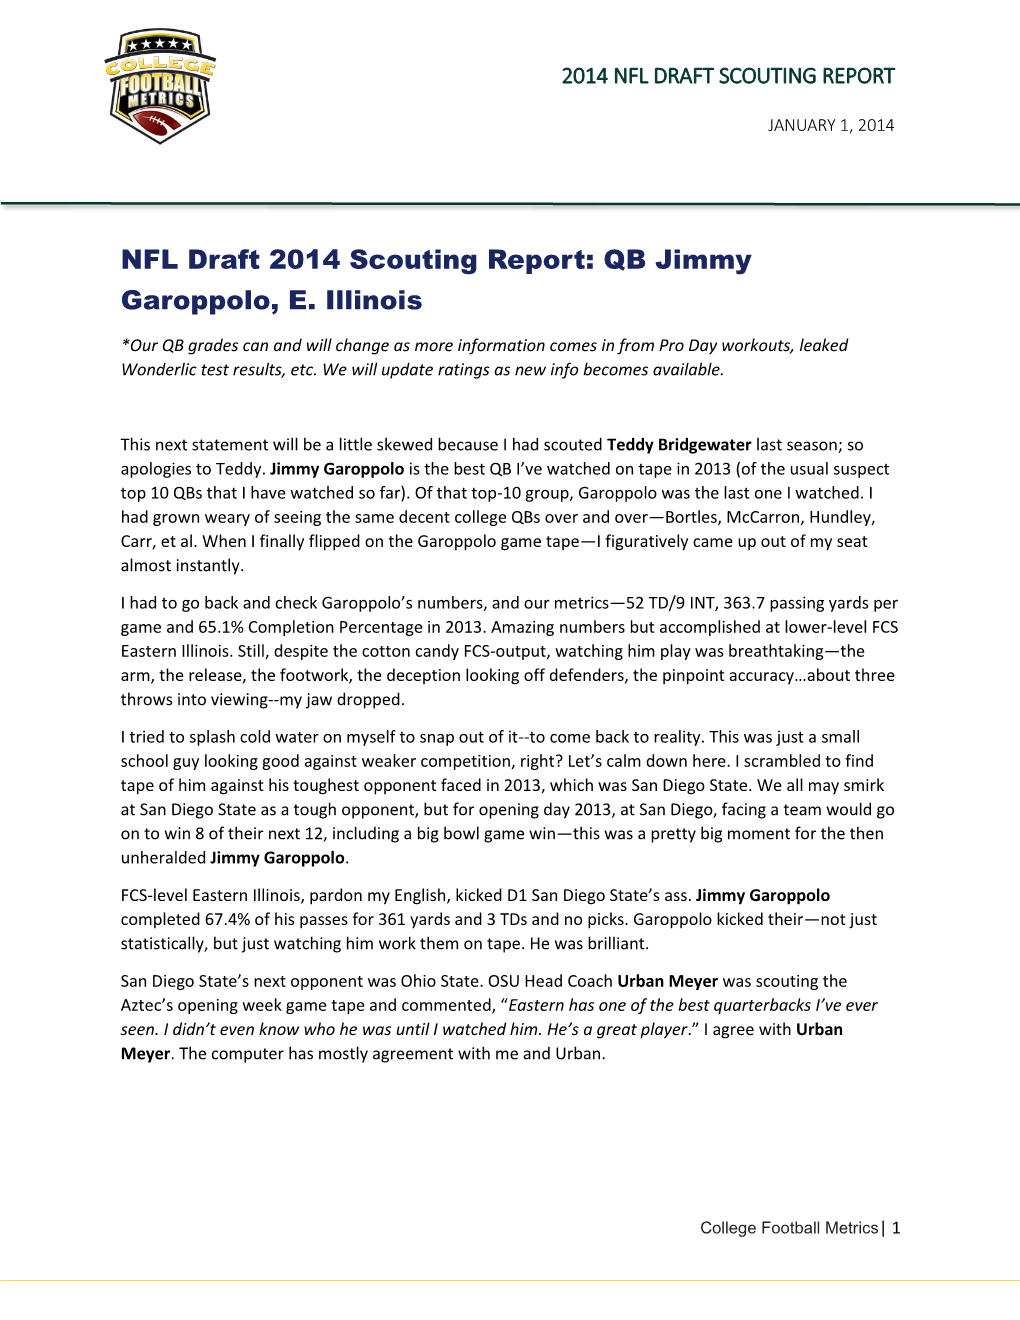 NFL Draft 2014 Scouting Report: QB Jimmy Garoppolo, E. Illinois